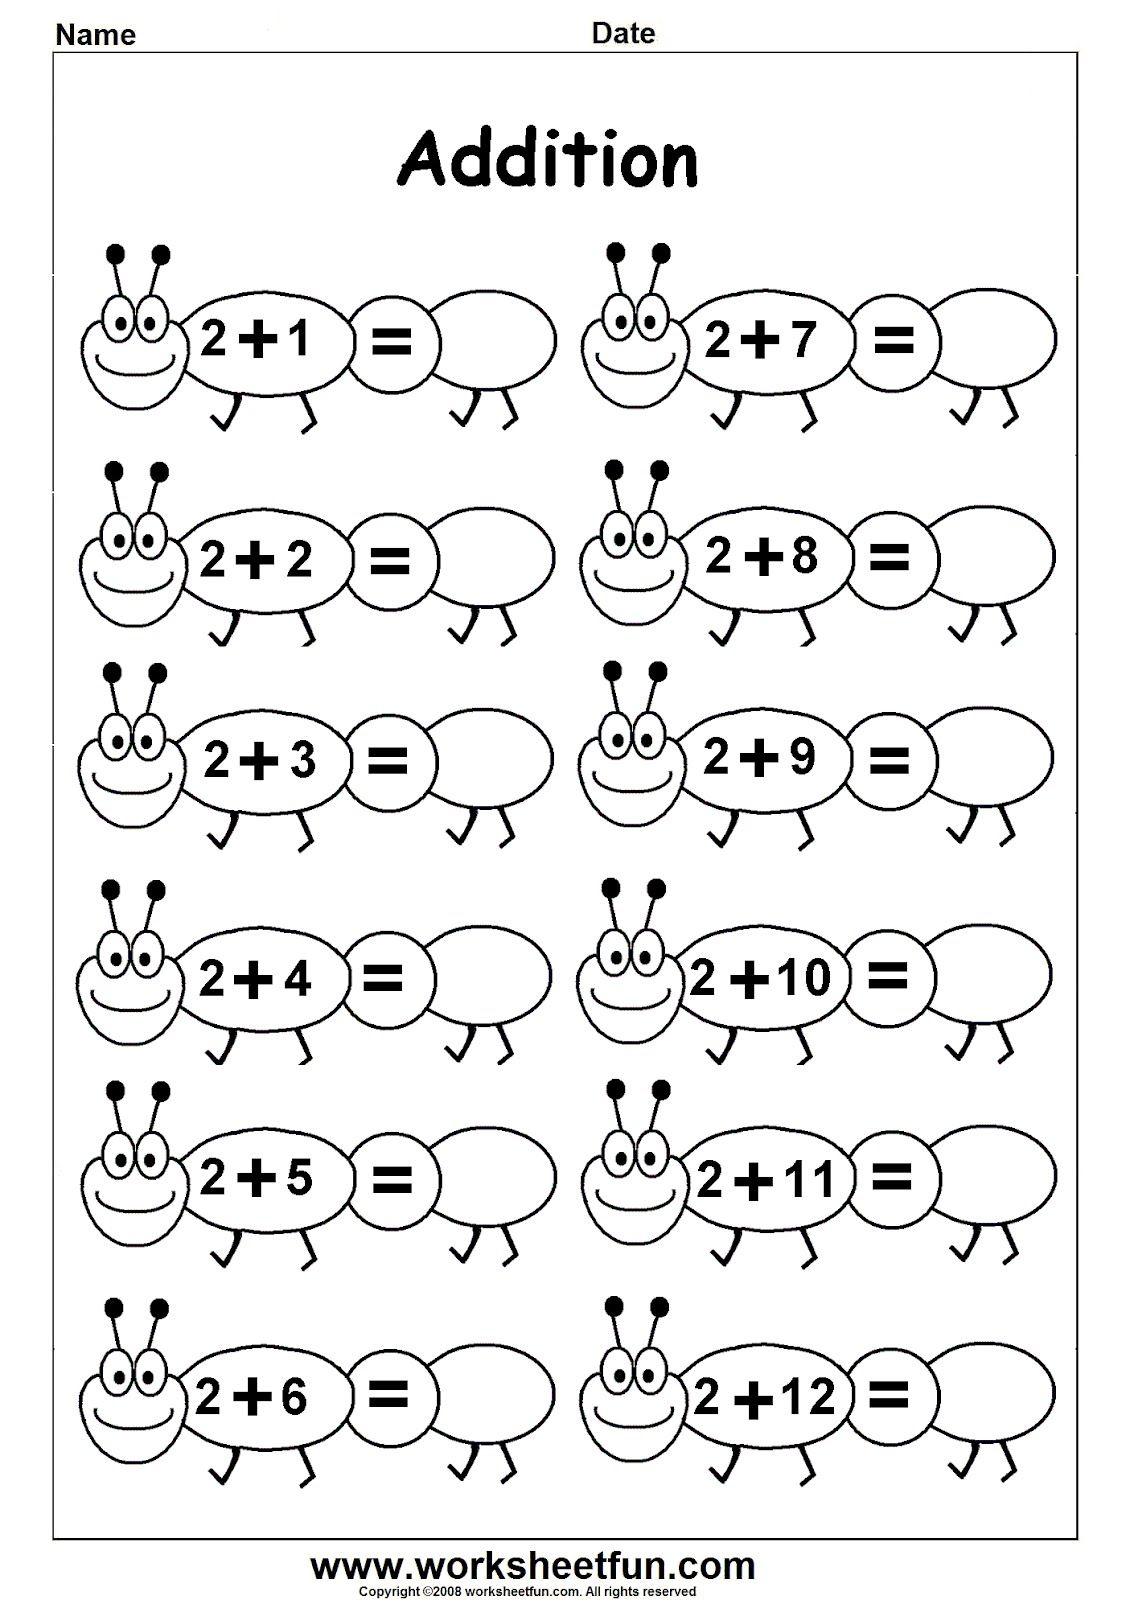 Worksheetfun - Free Printable Worksheets | Ethan School - Free Printable Math Addition Worksheets For Kindergarten